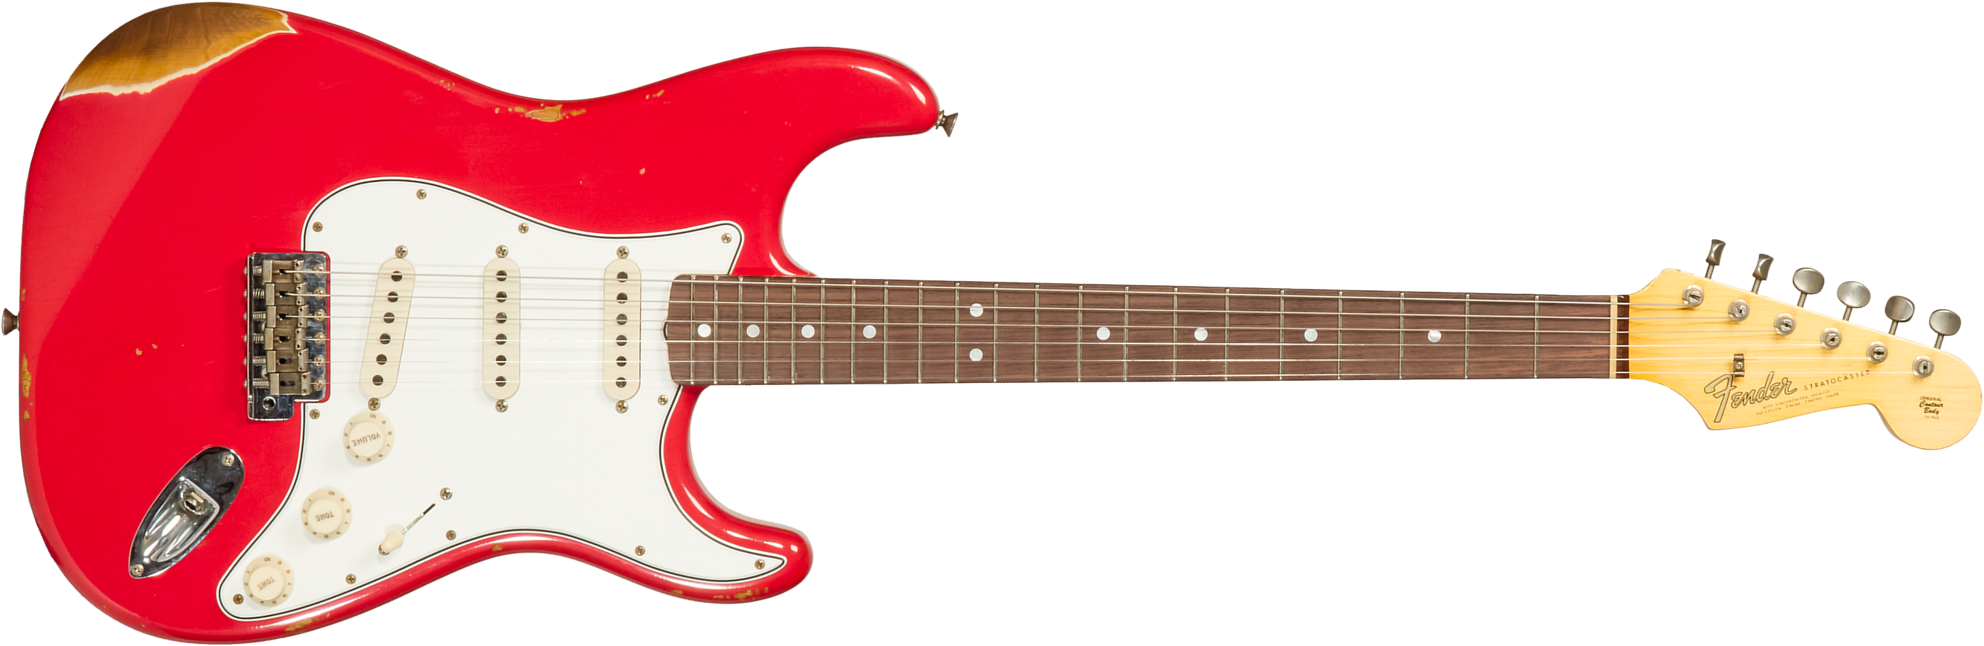 Fender Custom Shop Strat Late 1964 3s Trem Rw #cz568395 - Relic Aged Fiesta Red - Guitarra eléctrica con forma de str. - Main picture